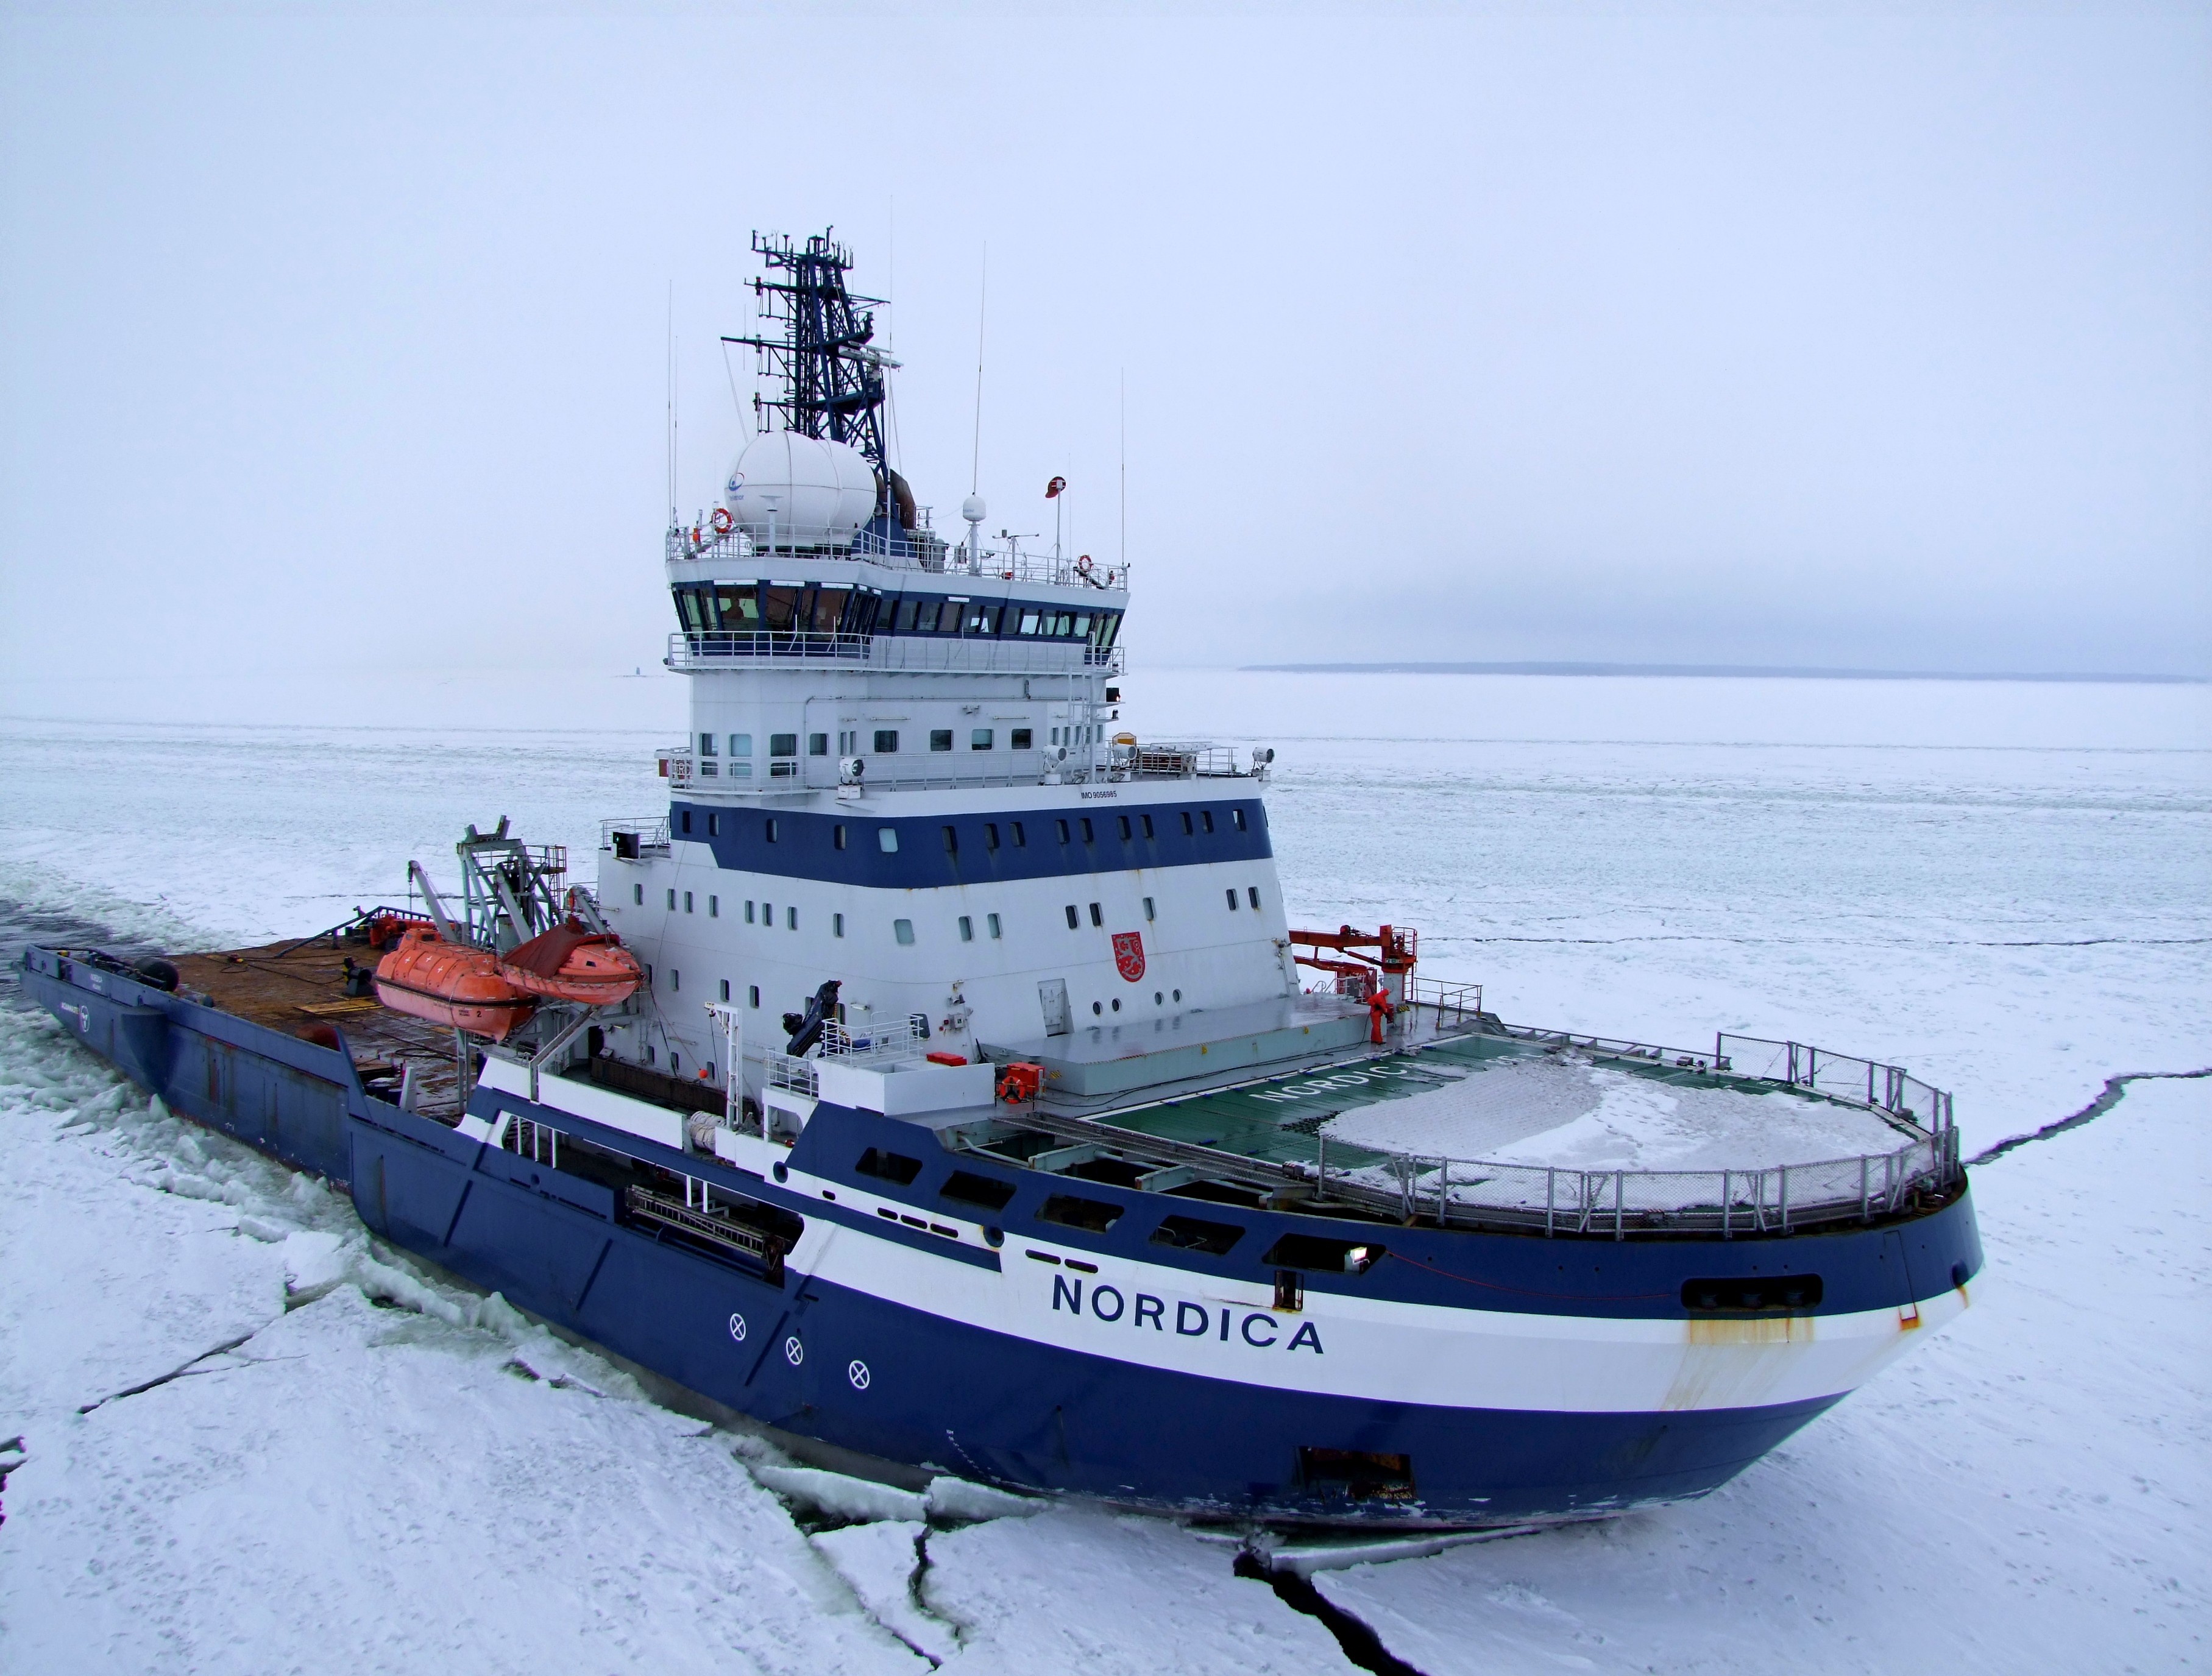 Arctia Ltd. icebreaker Nordica assisting a merchant ship near Hamina, Finland, on February 2009. (Cornelia Klier / CC via Wikimedia Commons)